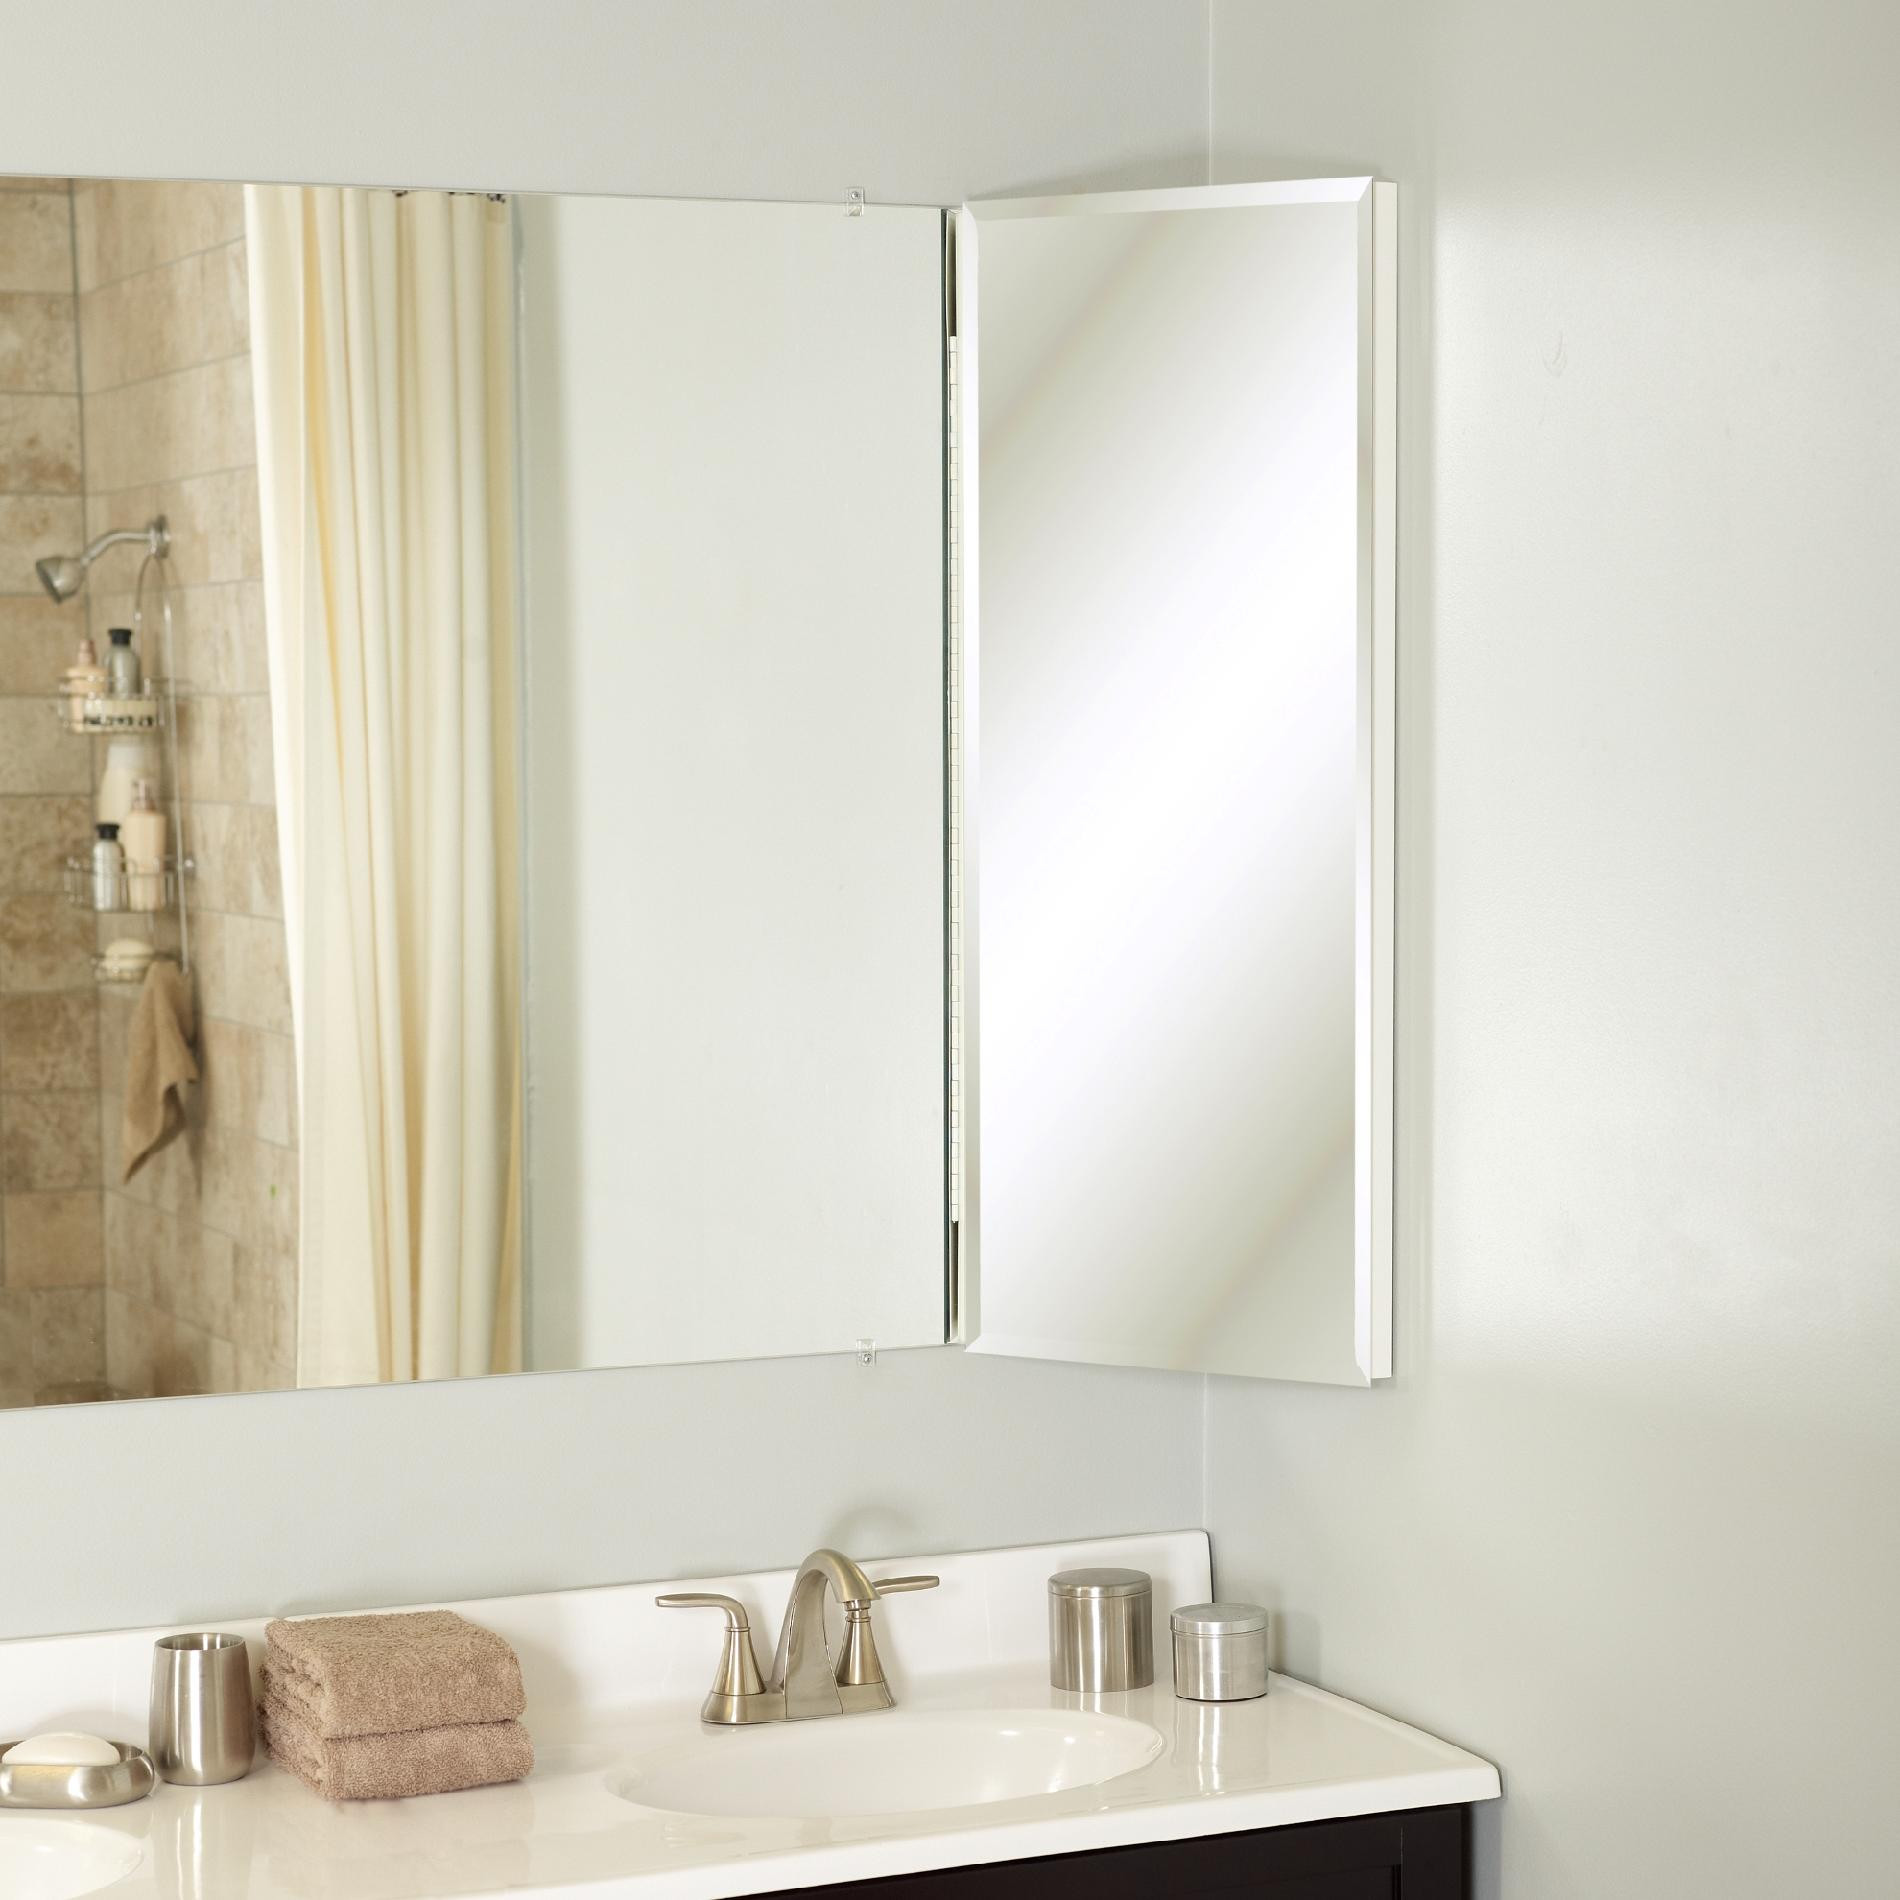 Corner Mirror Bathroom Cabinet
 Zenith Products Over the Mirror Corner Cabinet 14" x 36